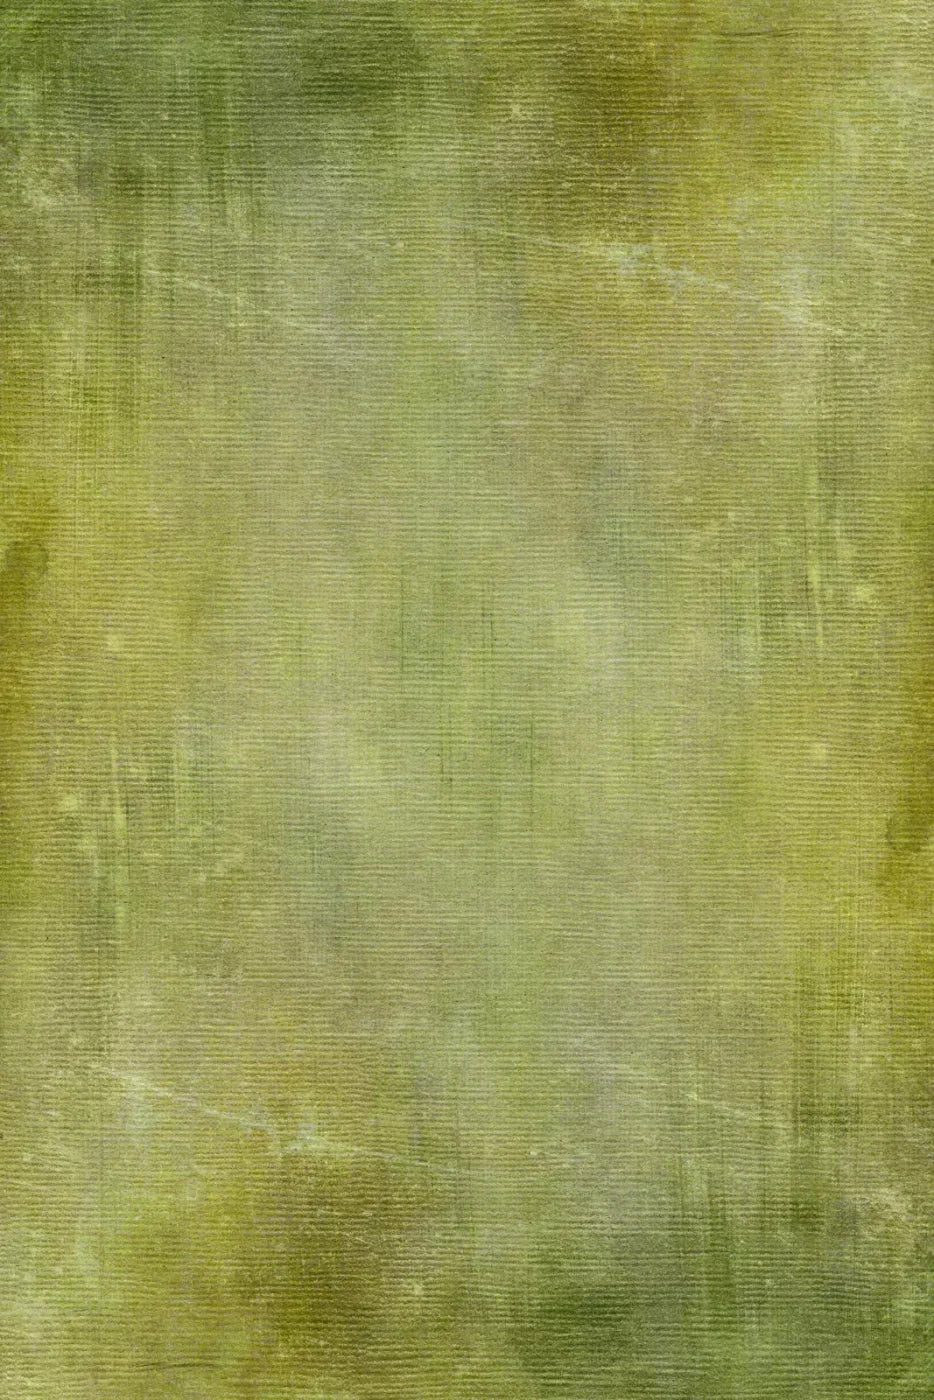 Chartreuse 4X5 Rubbermat Floor ( 48 X 60 Inch ) Backdrop